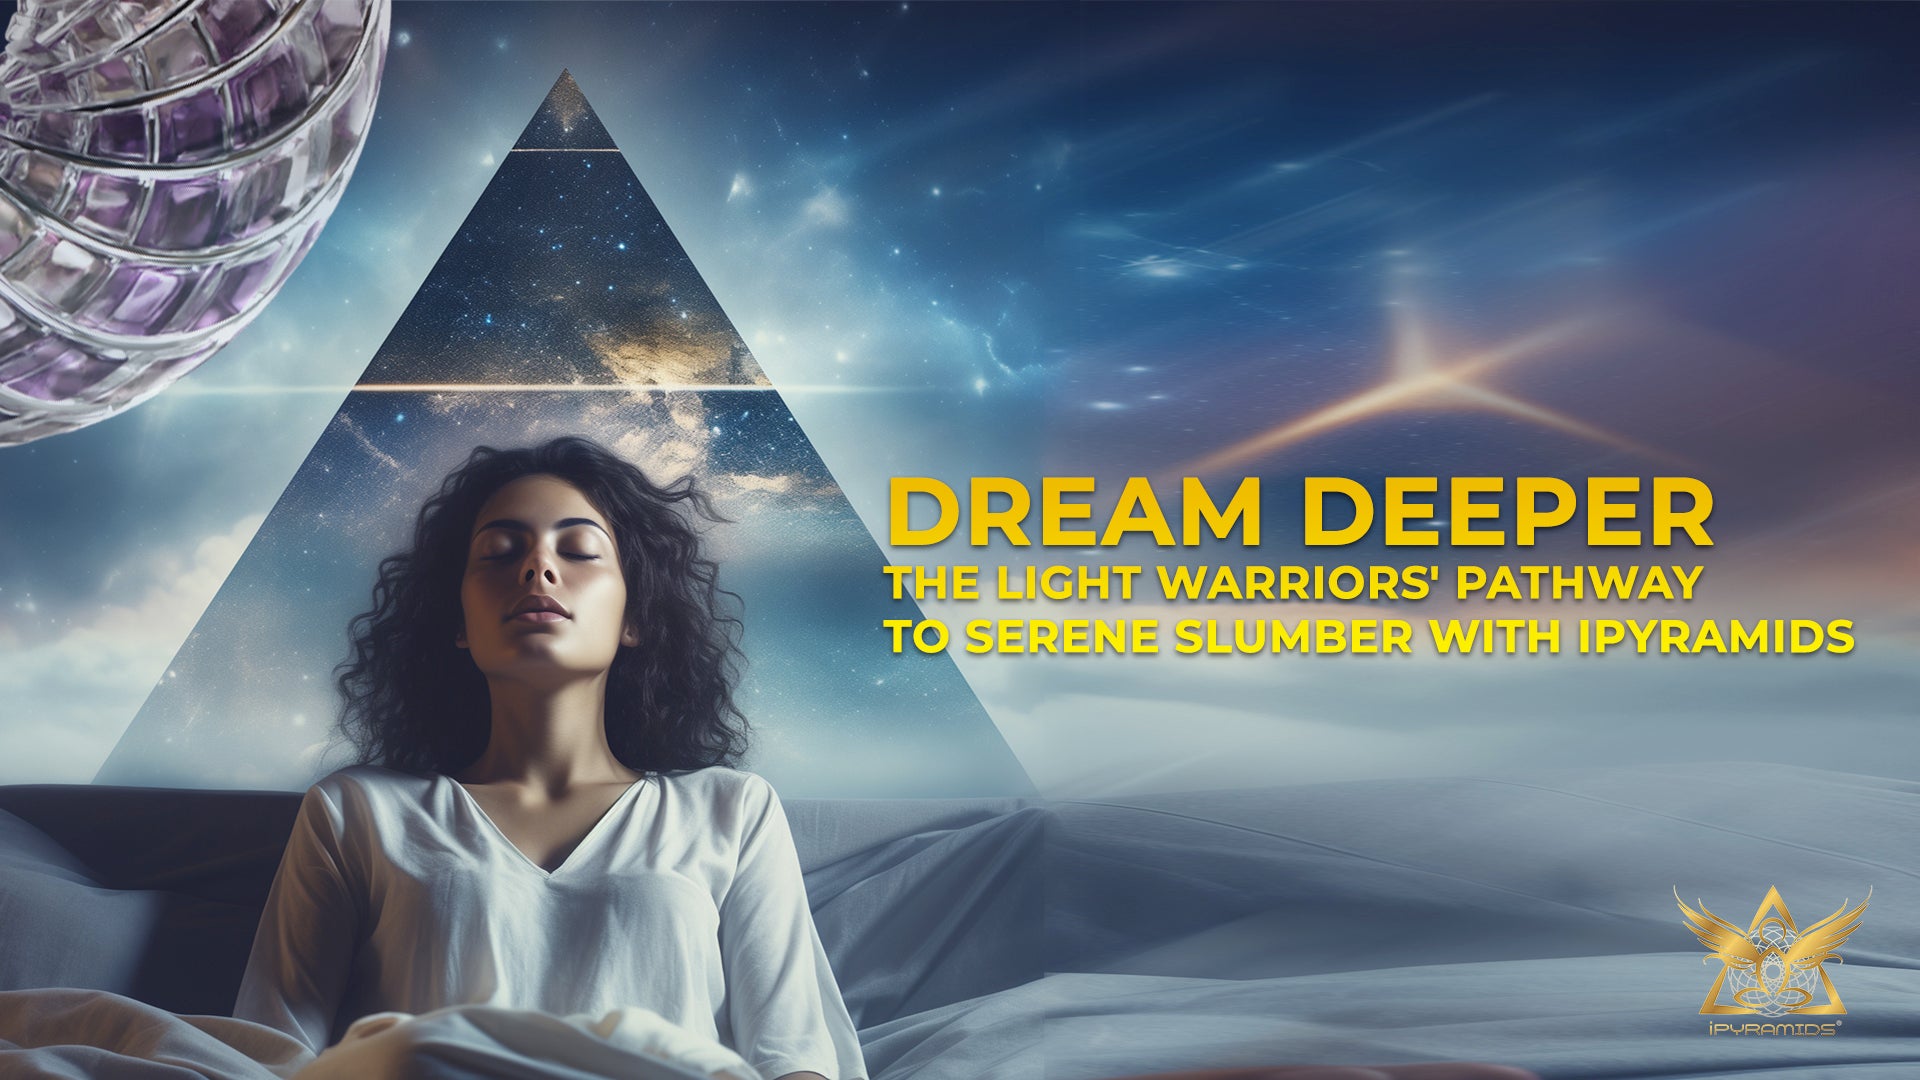 Dream Deeper: The Light Warriors' Pathway to Serene Slumber with iPyramids